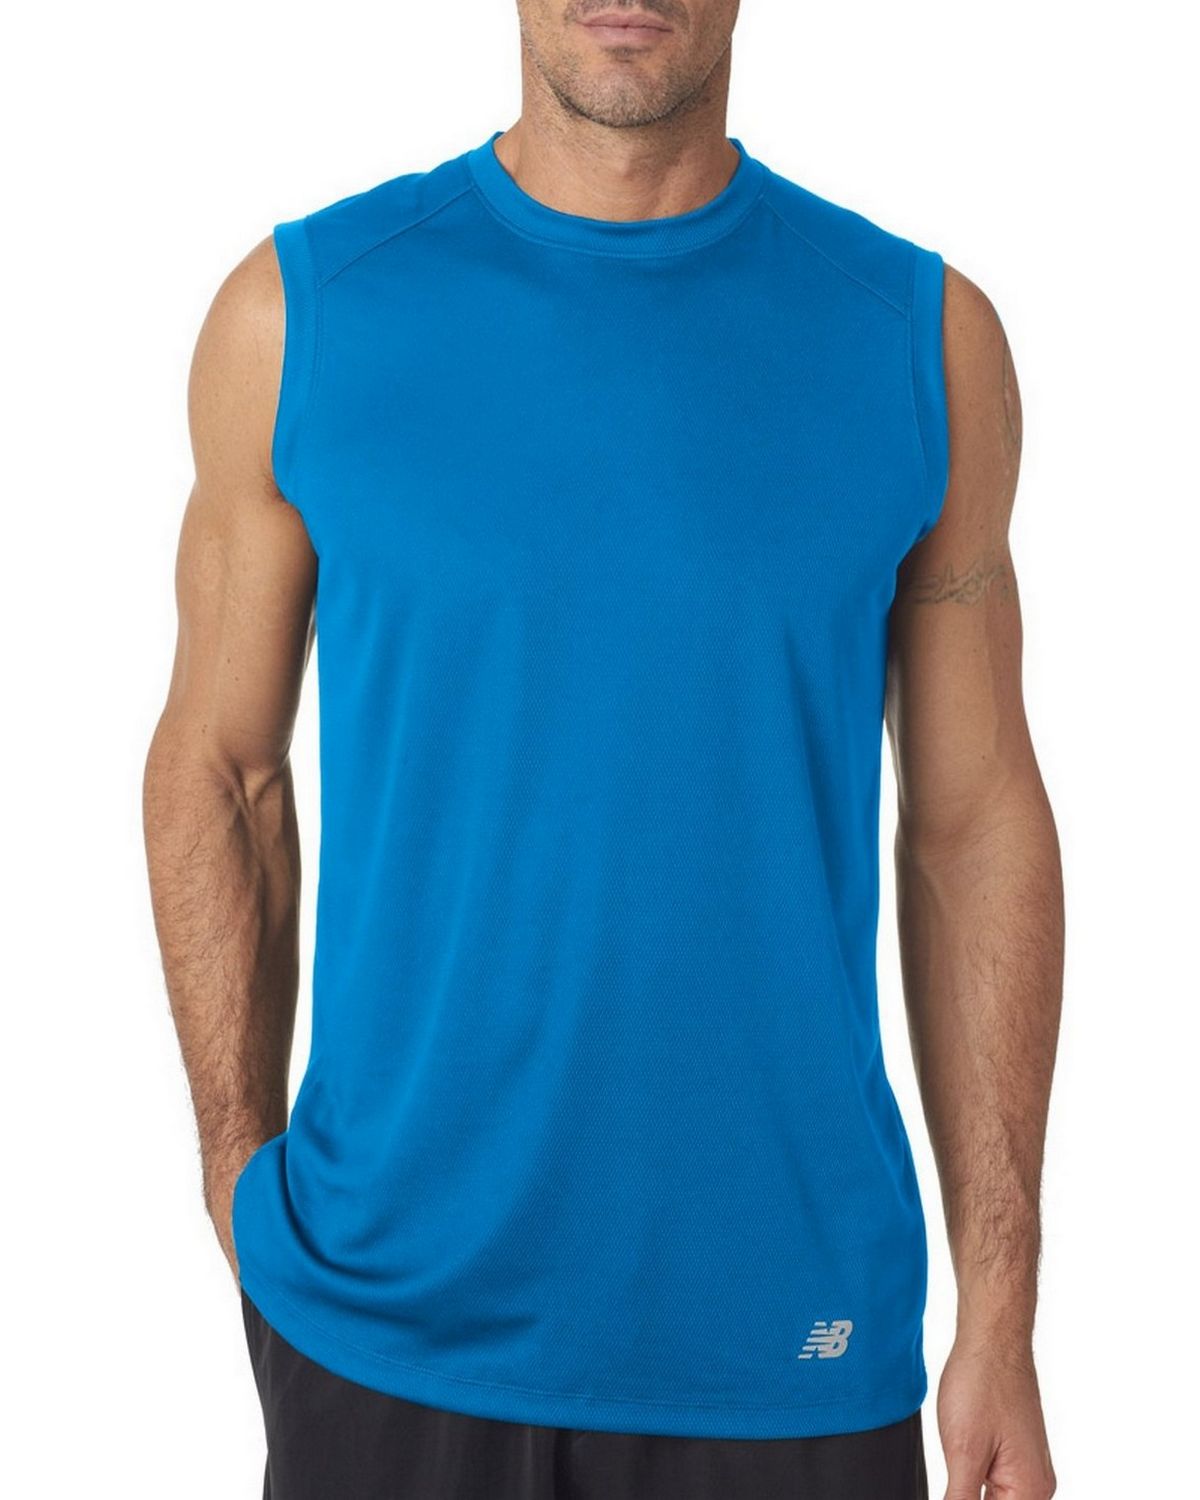 New Balance NB7117 Mens NDurance Athletic Workout T-Shirt ...